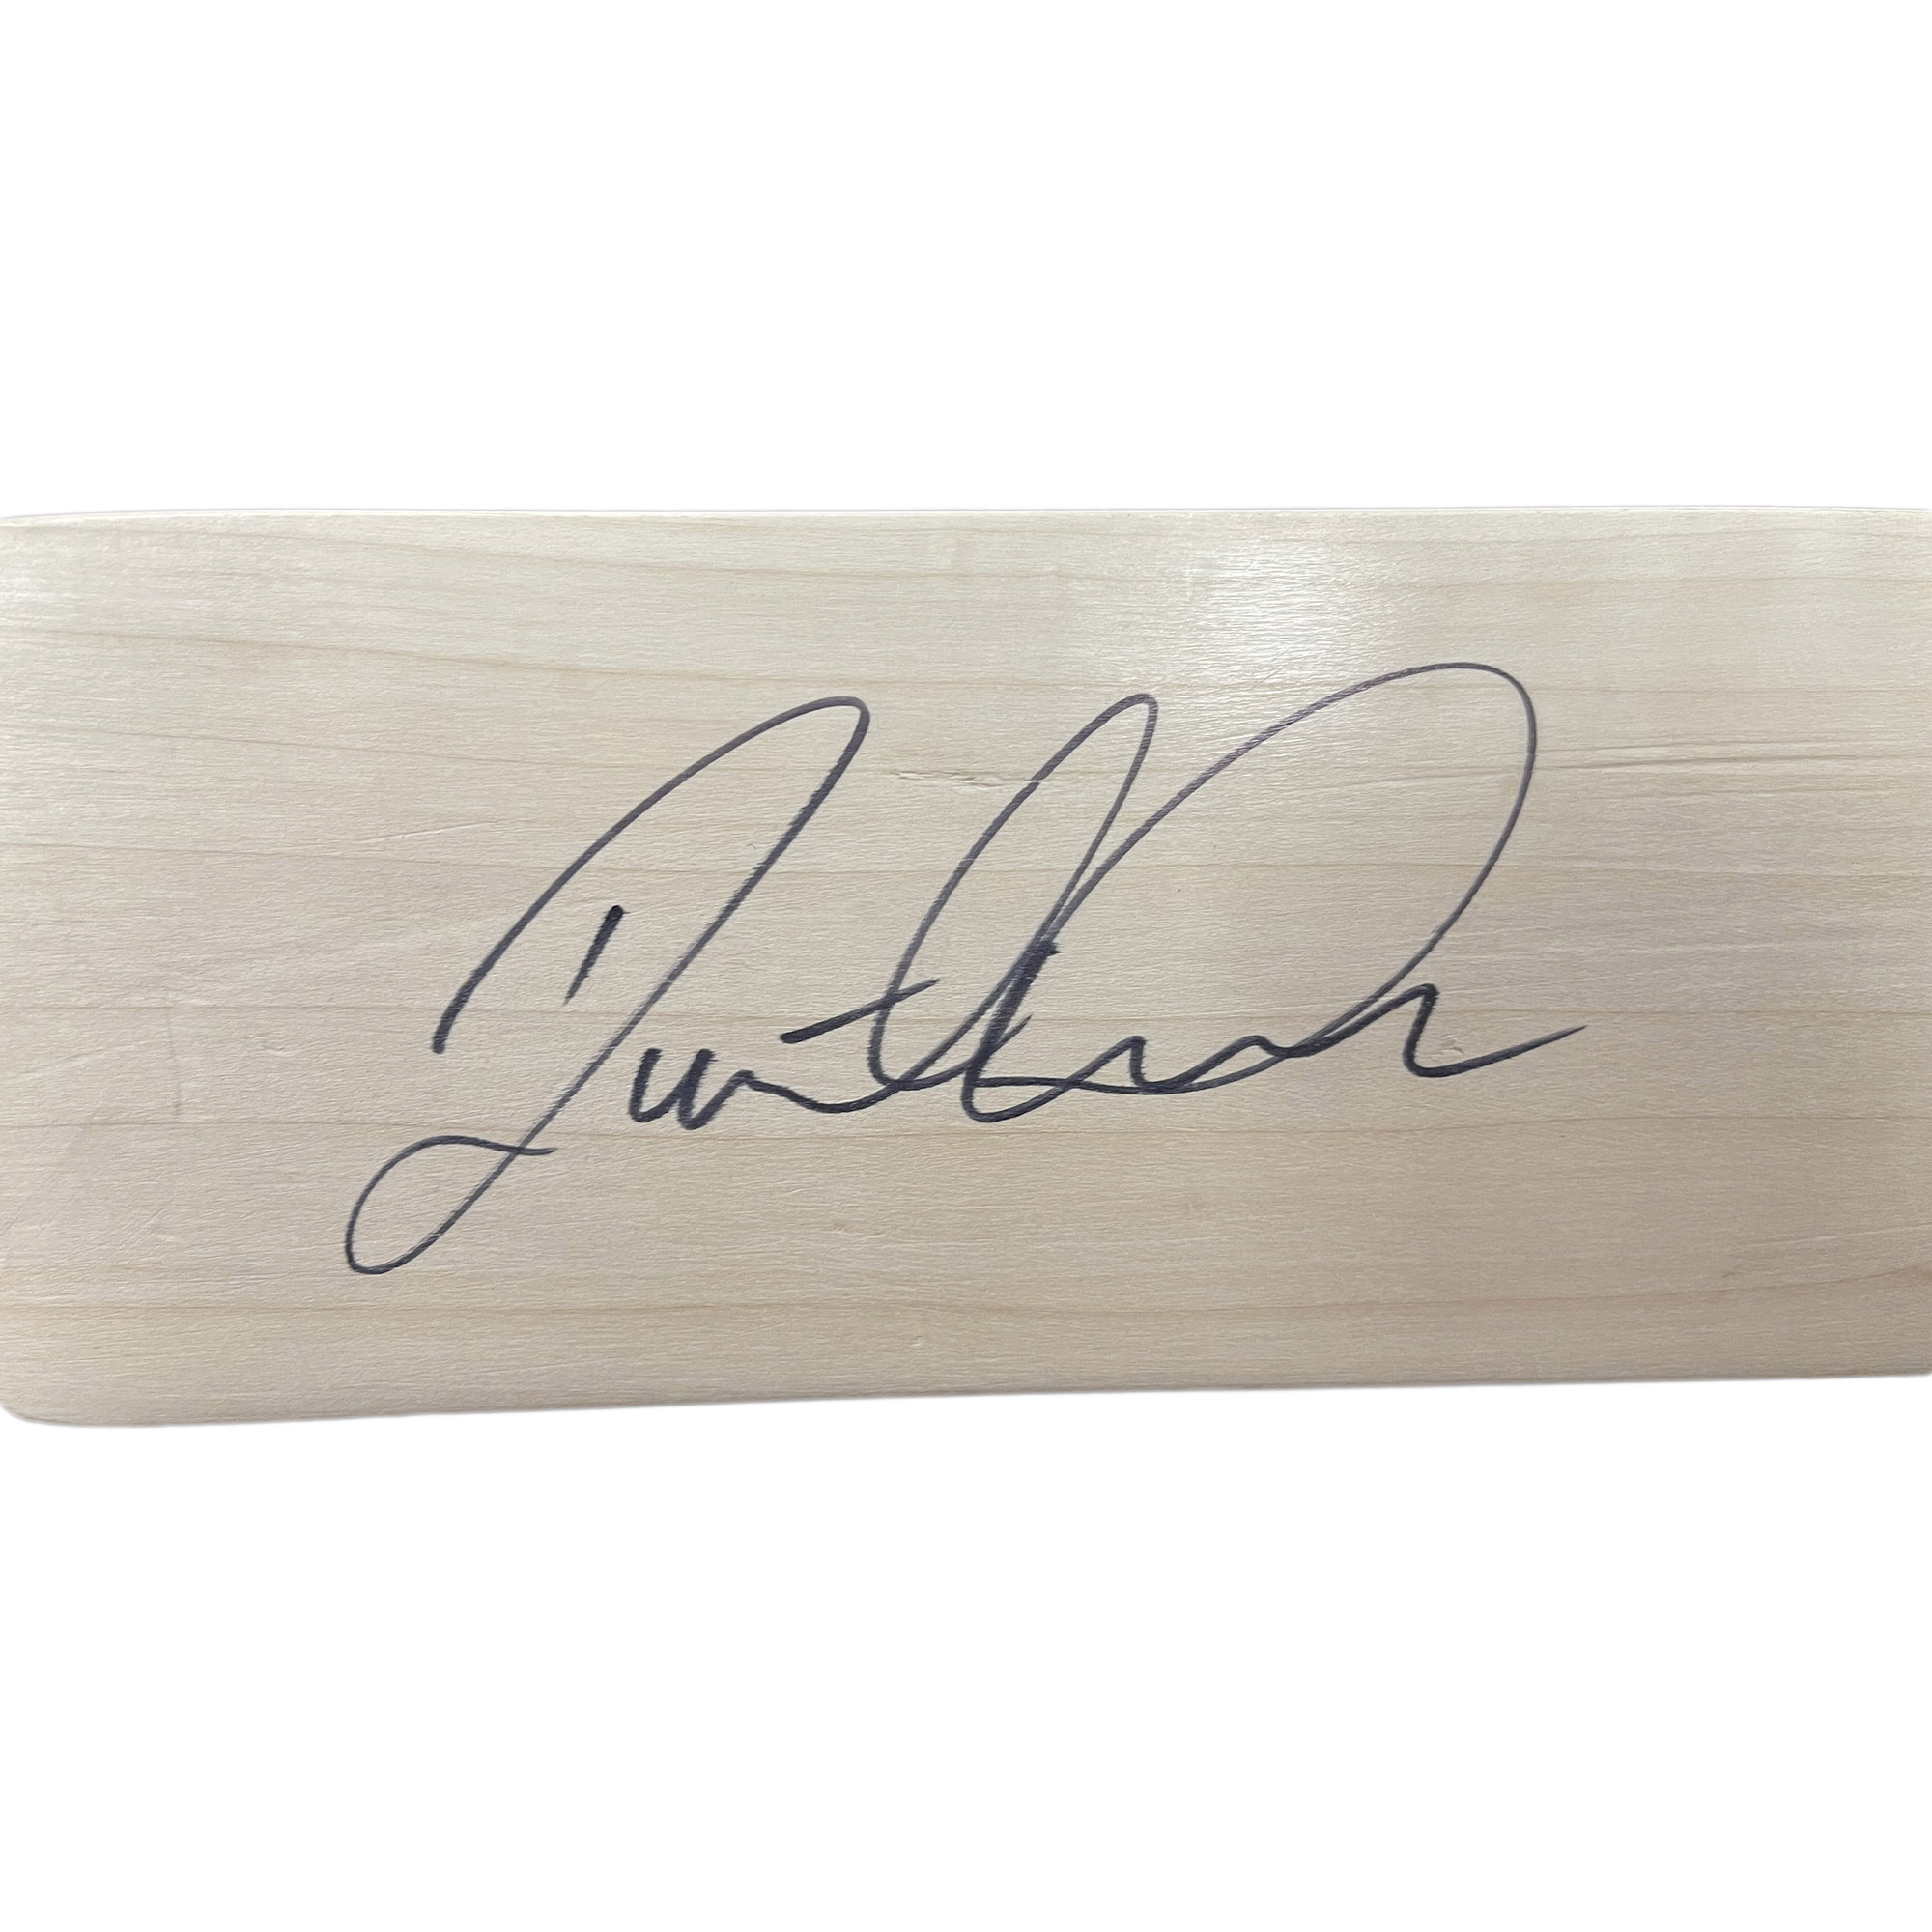 Cricket - David Warner Signed Cricket Bat